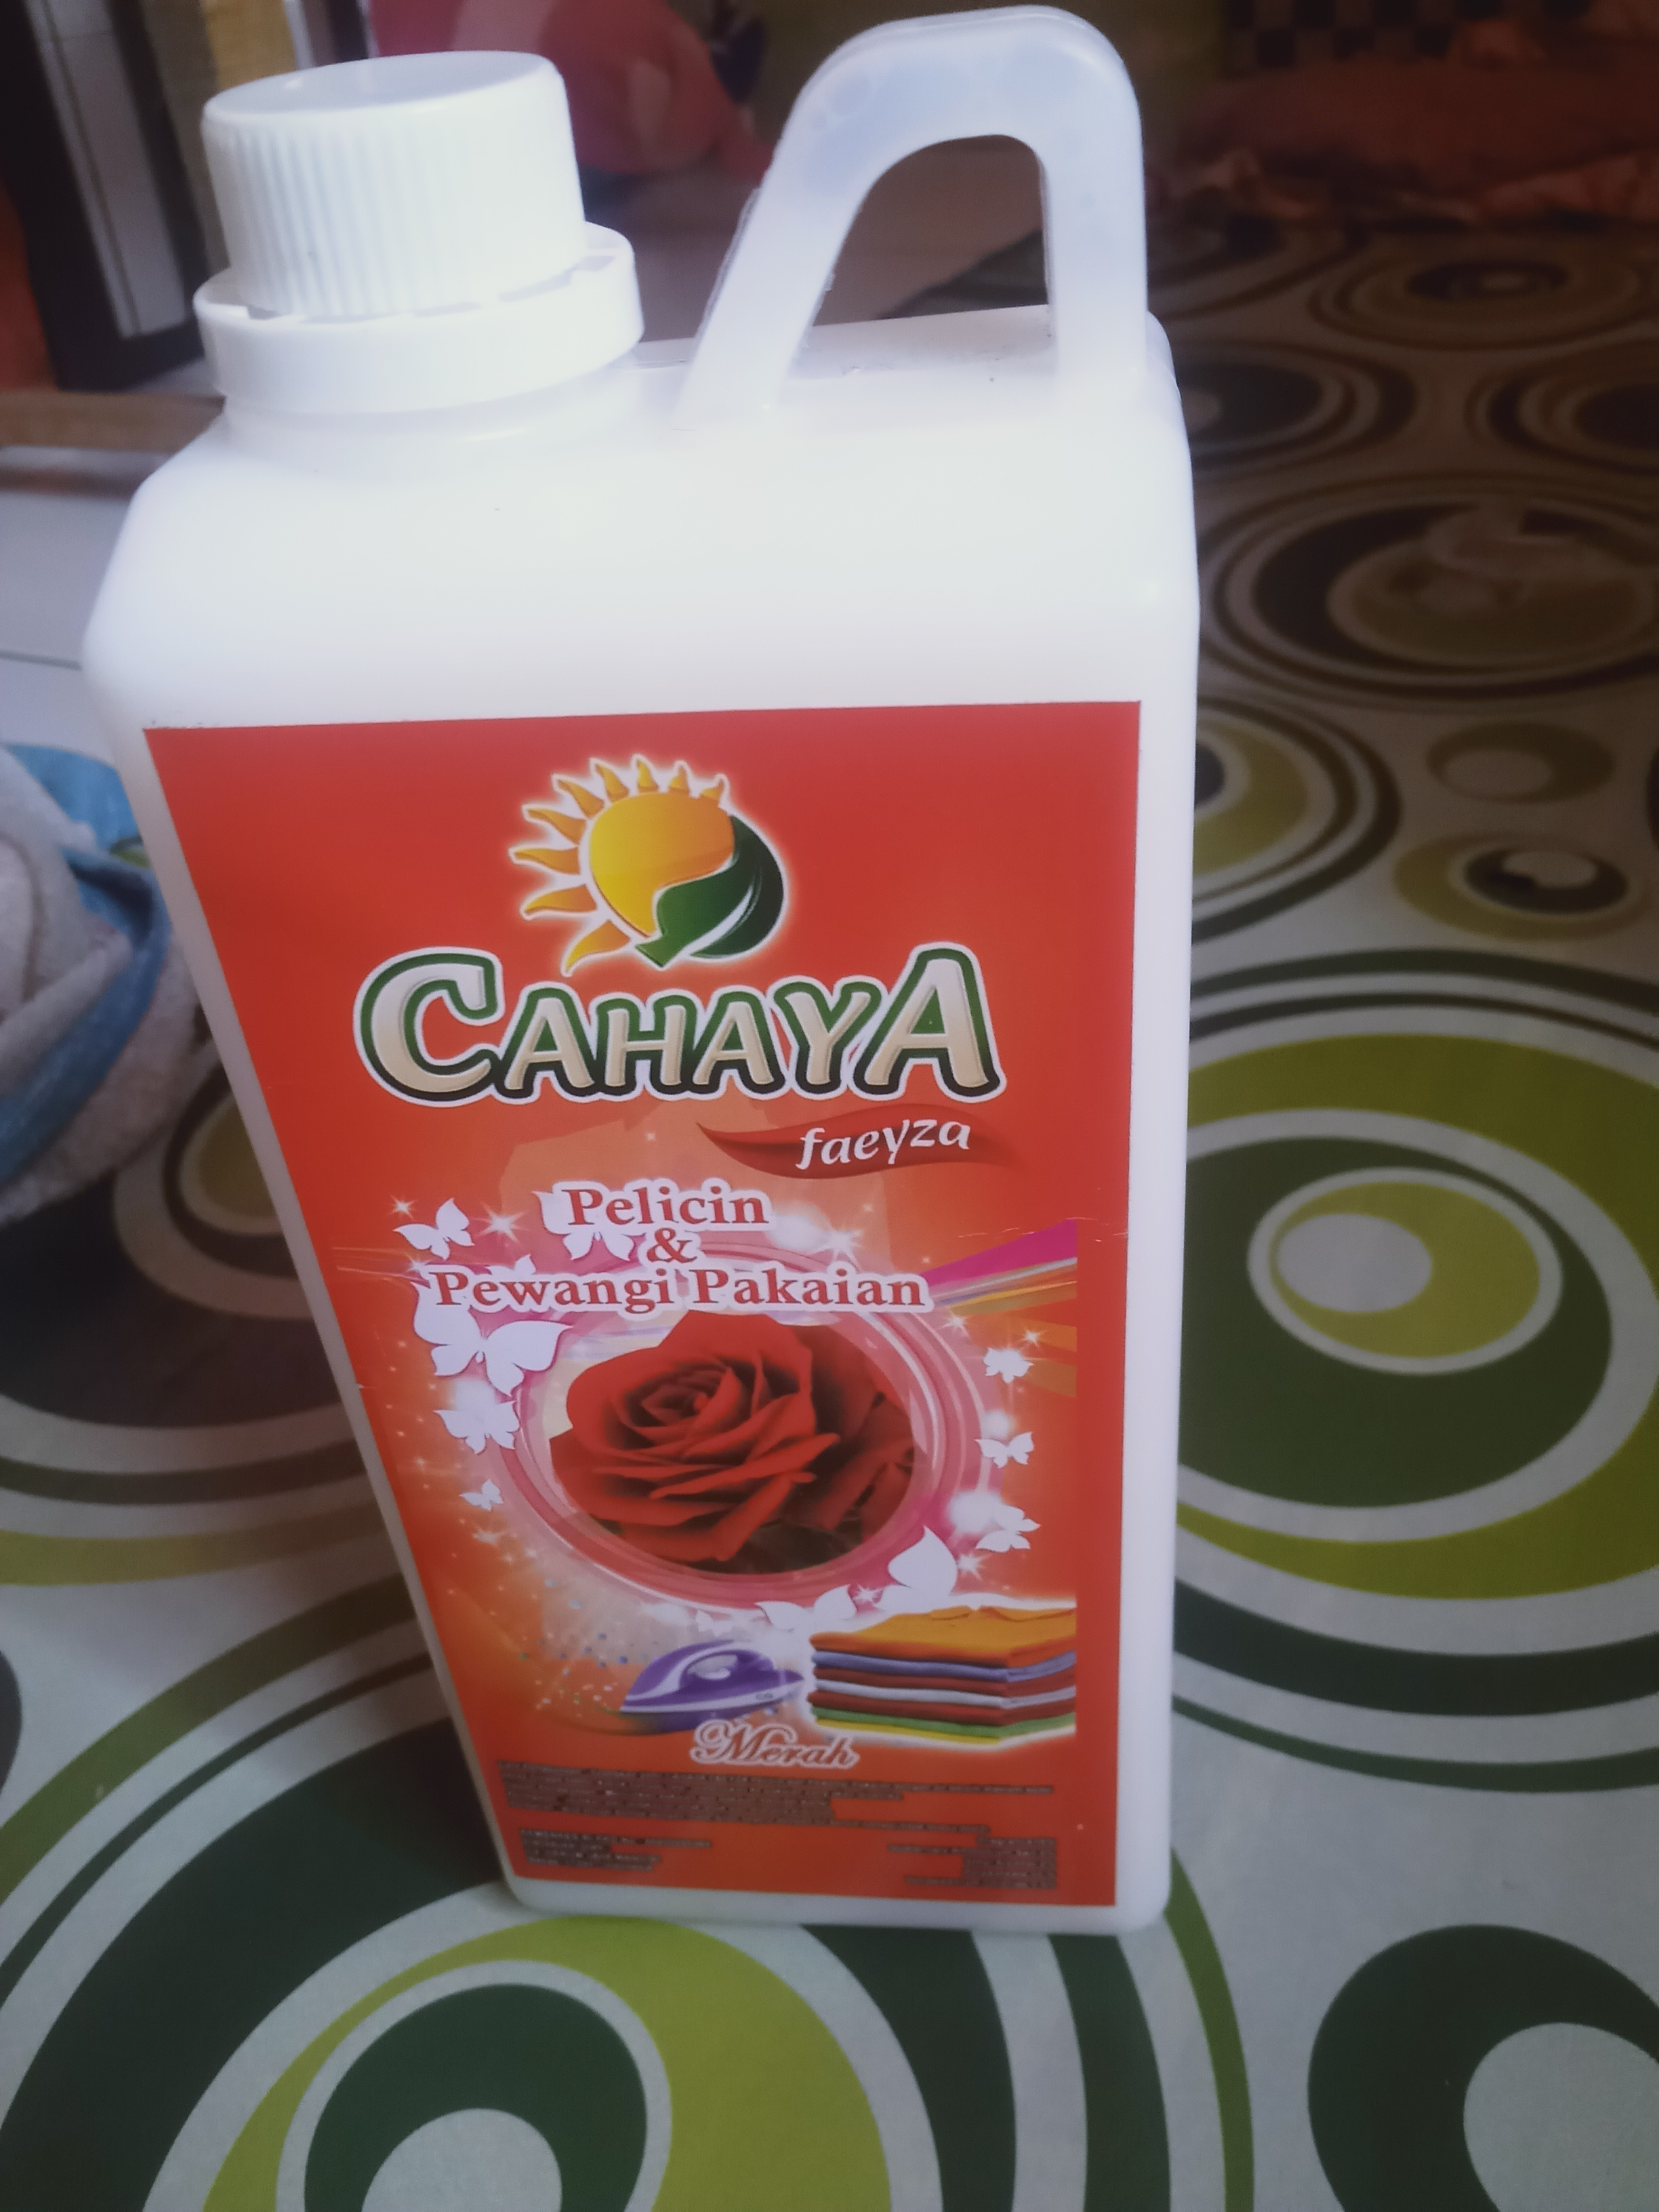 pewangi laundry CAHAYA (sakura)wangi | beda dengan lama,kental Indonesia Lazada lainya 100%original tahan yang